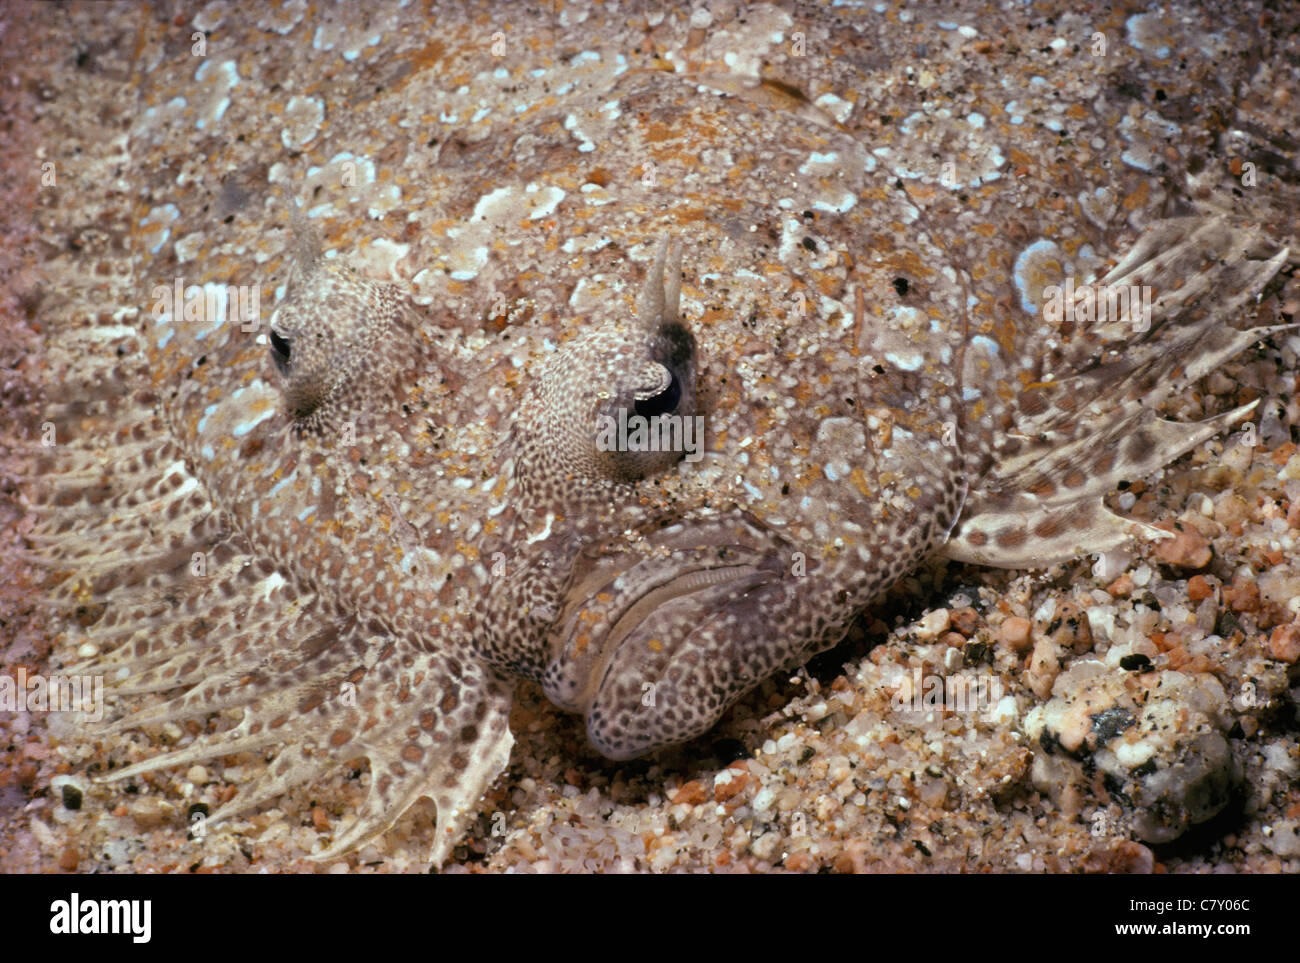 Panther Flounder (Bothus pantherinus) camouflaged on sandy bottom. Egypt - Red Sea Stock Photo